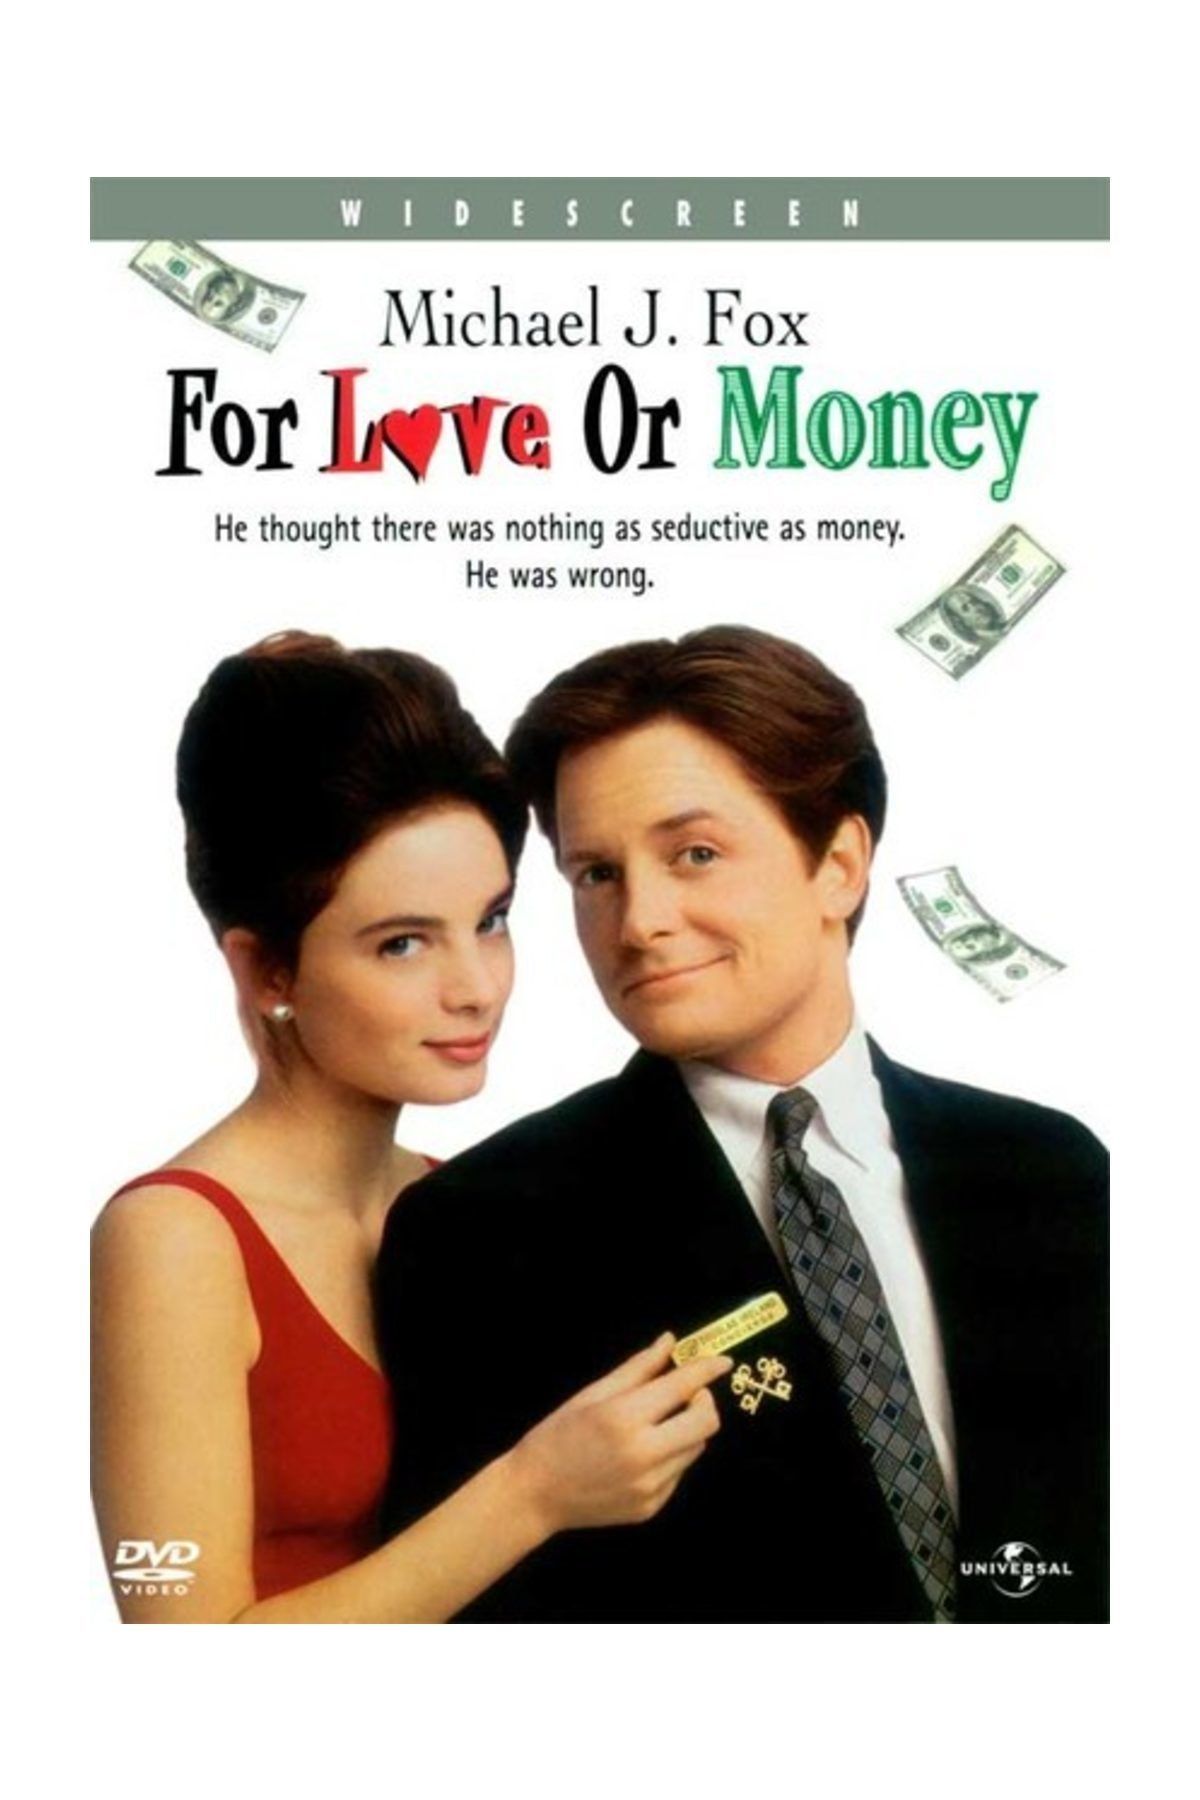 Pal DVD-aŞK MI pARA MI? - For Love Or Money?